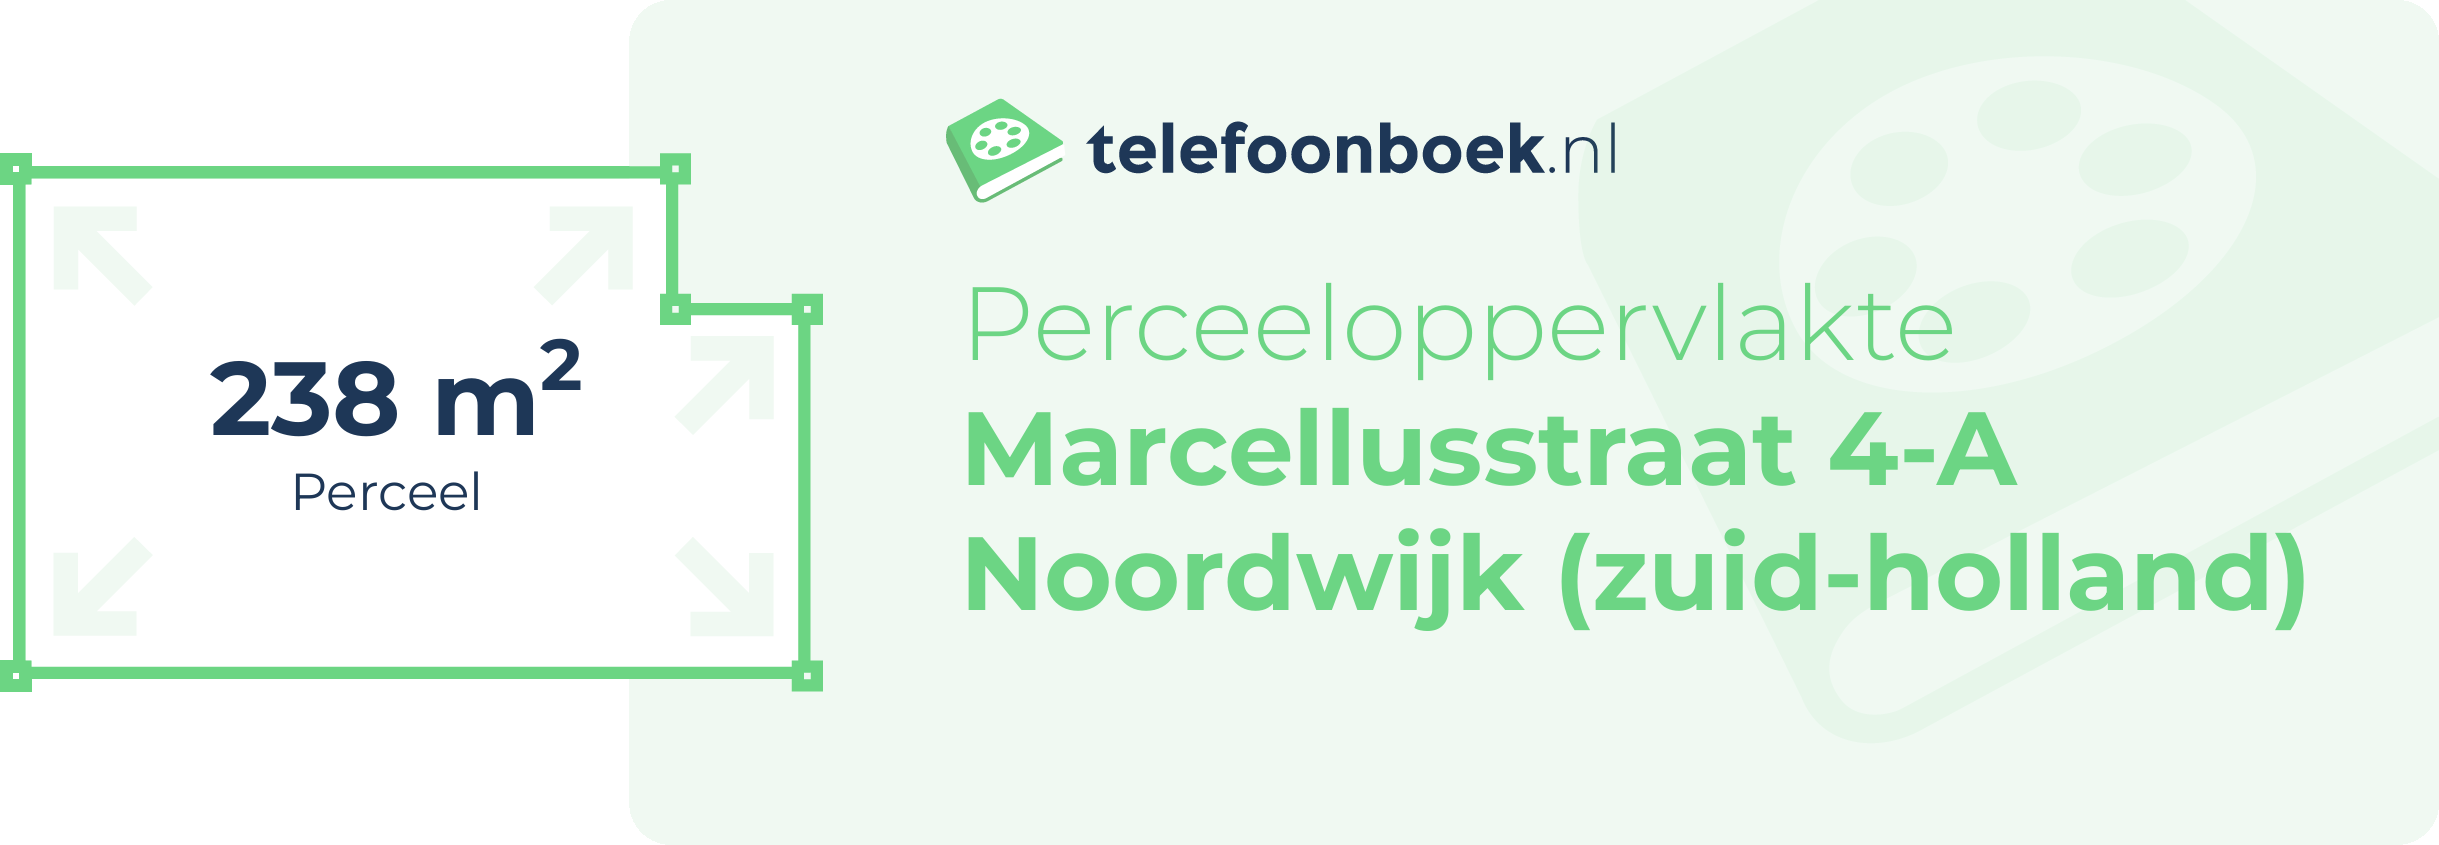 Perceeloppervlakte Marcellusstraat 4-A Noordwijk (Zuid-Holland)